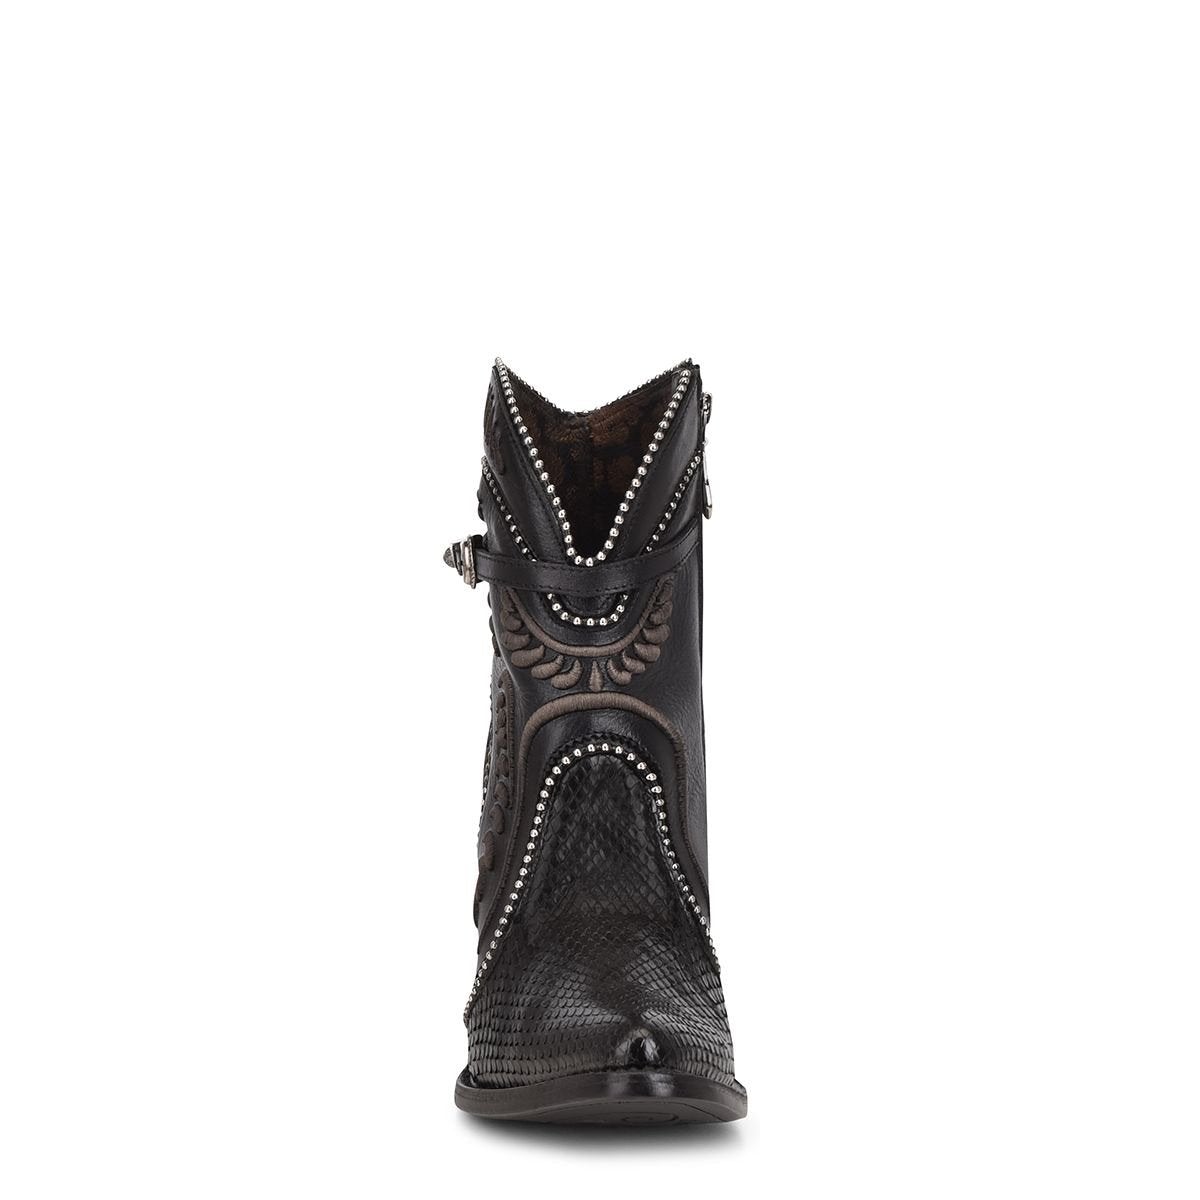 3F59PH - Cuadra black dress cowgirl python skin ankle boots for women-Kuet.us